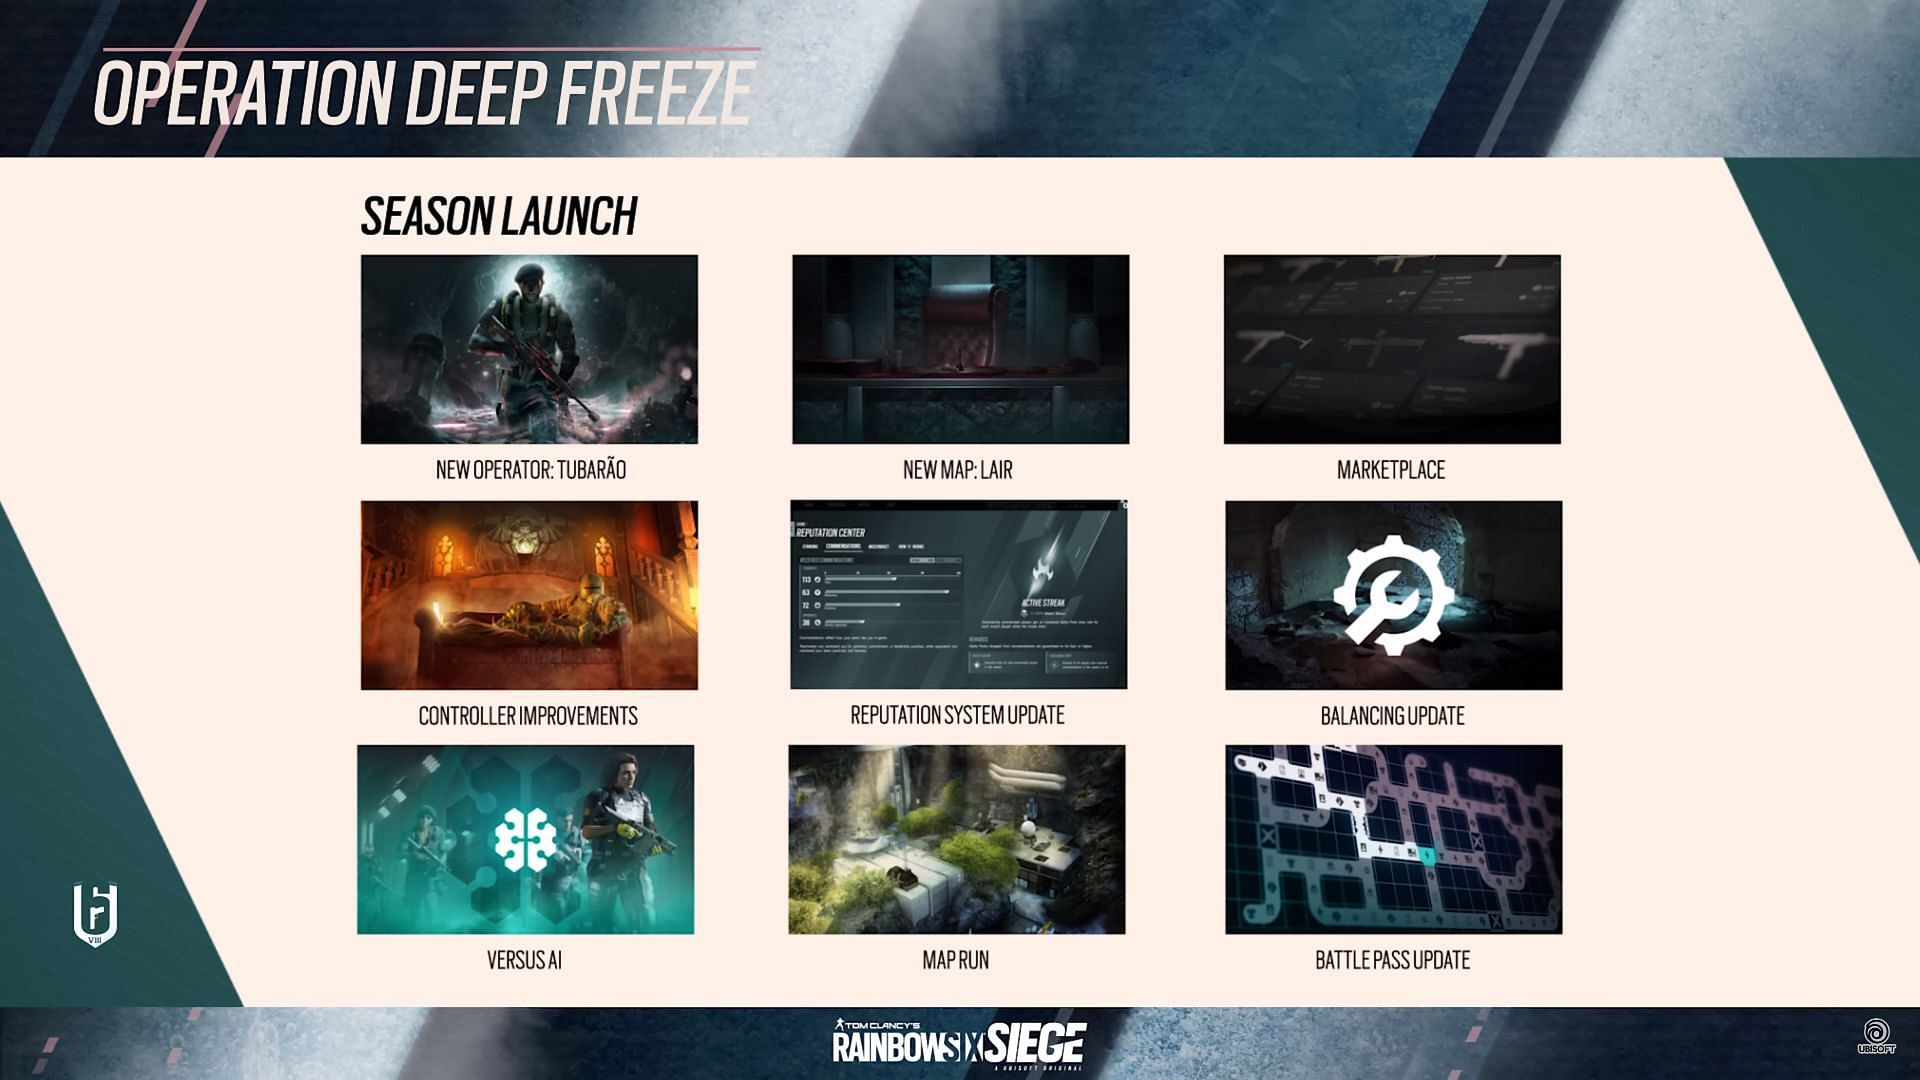 Season launch panel for Operation Deep Freeze (Image via Ubisoft)